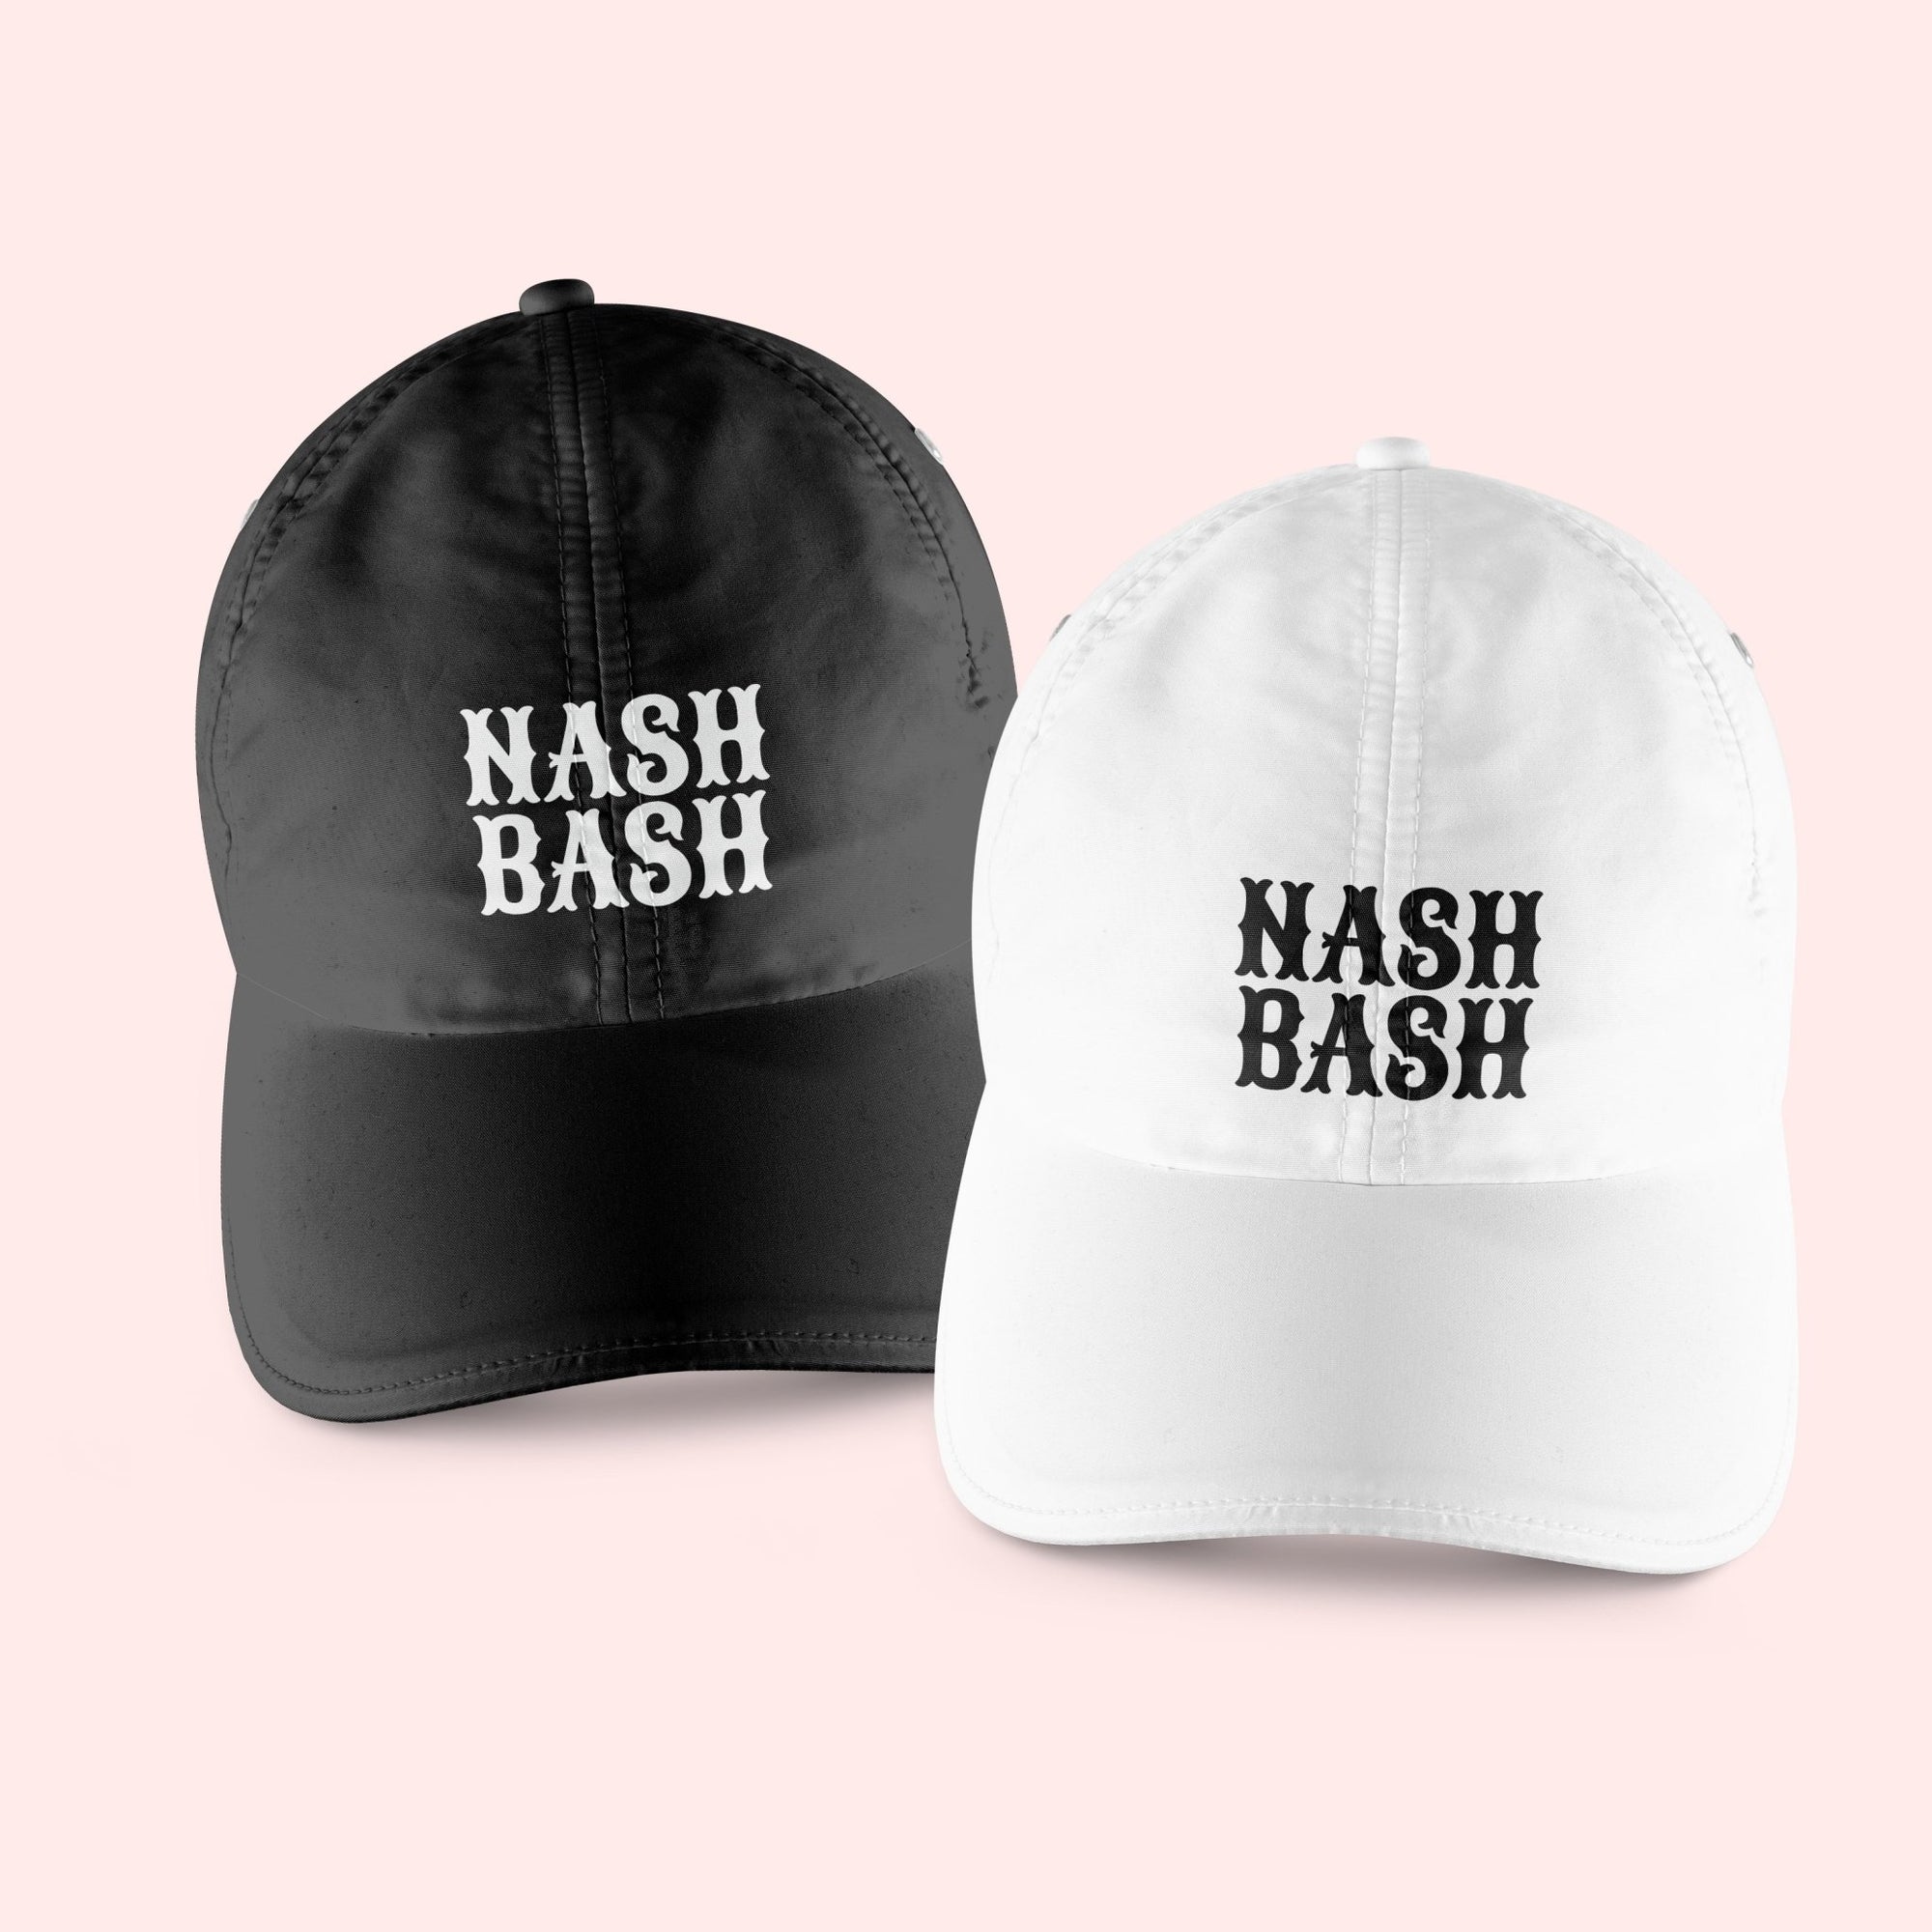 Nash Bash Baseball Hat